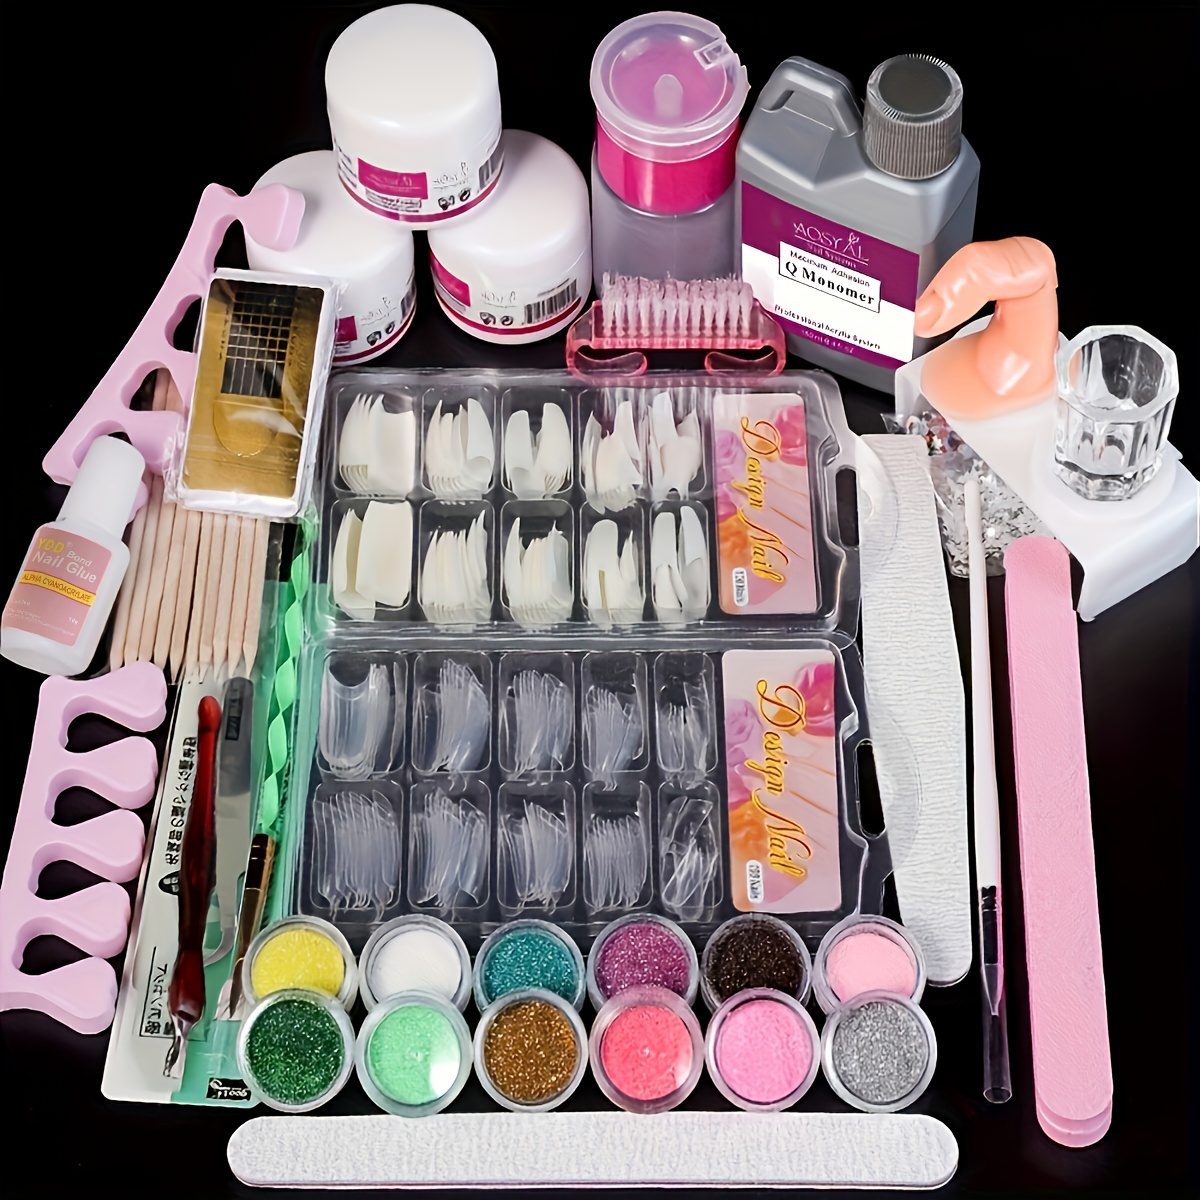 Morovan Acrylic Nail Kit With Everything - For Beginners Acrylic Nail  Supplies Gel Nail Polish Kit With U V Light, Nails Kit Acrylic Set Glitter